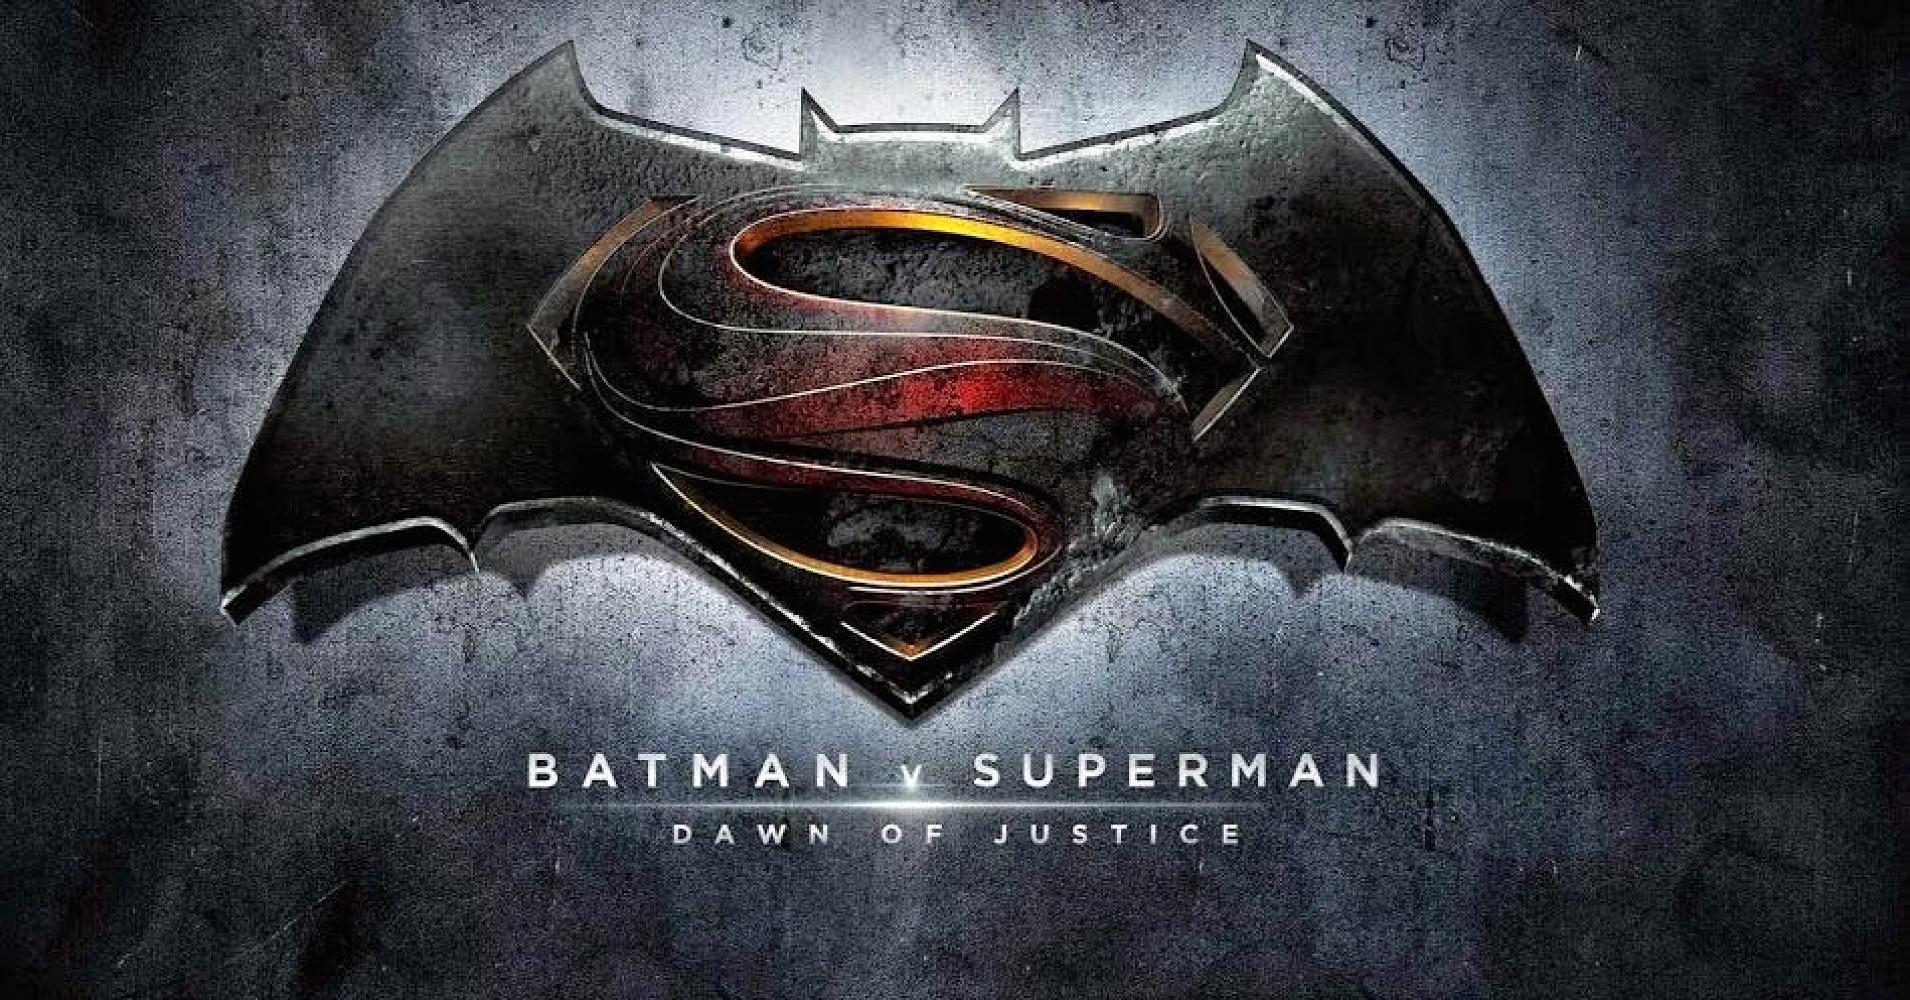 God Superman Logo - Batman V Superman: Was Lex Luthor right about God? | Bible Baptist ...